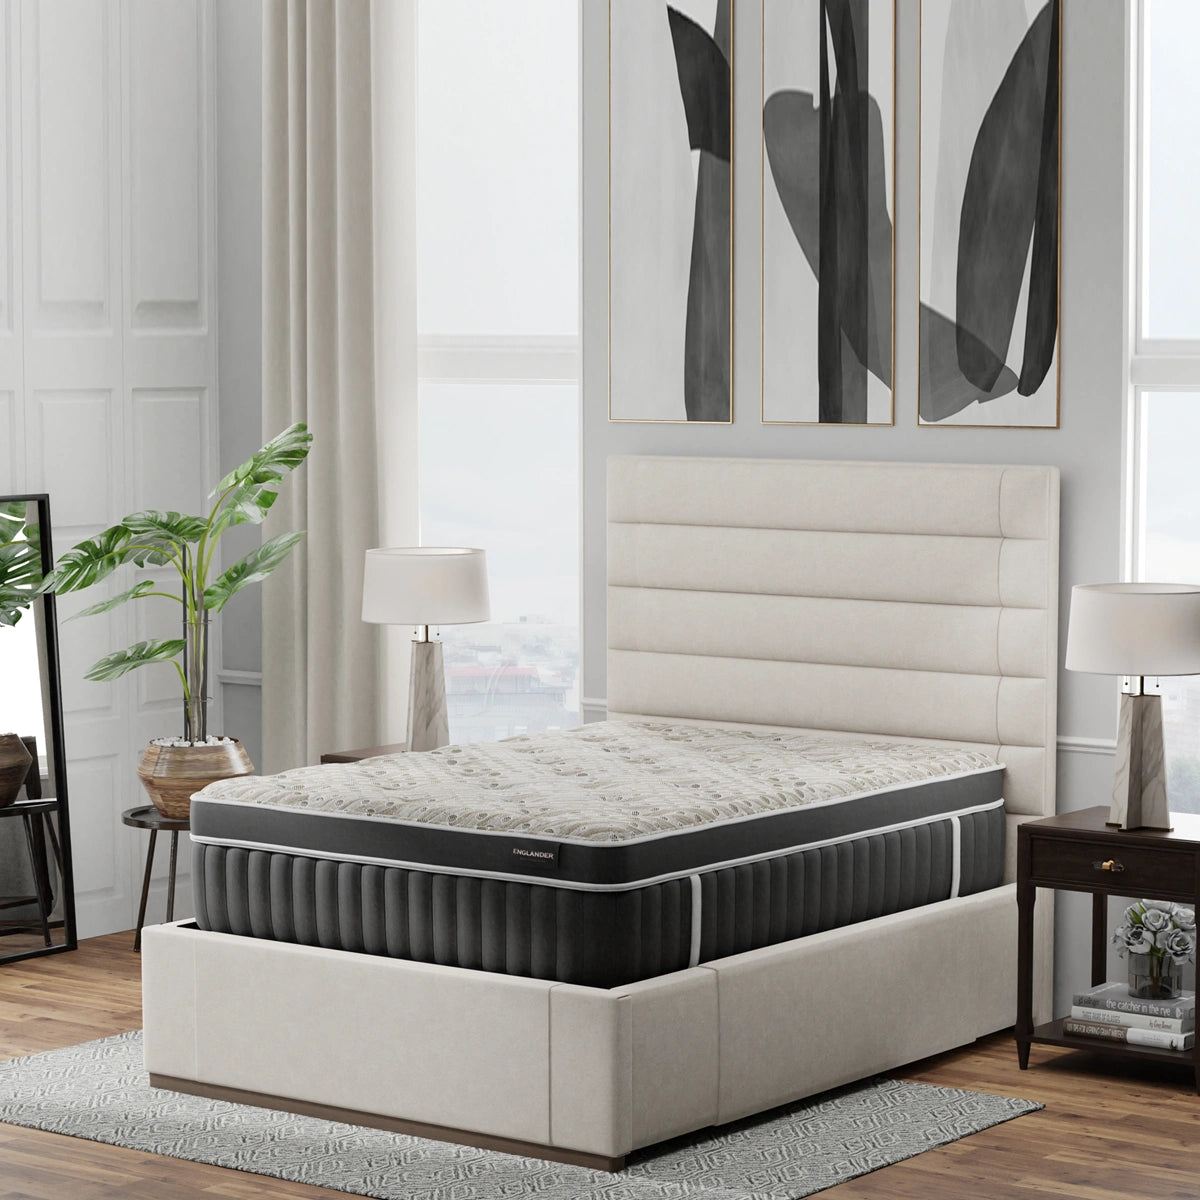 o’conner lux euro top mattress by englander